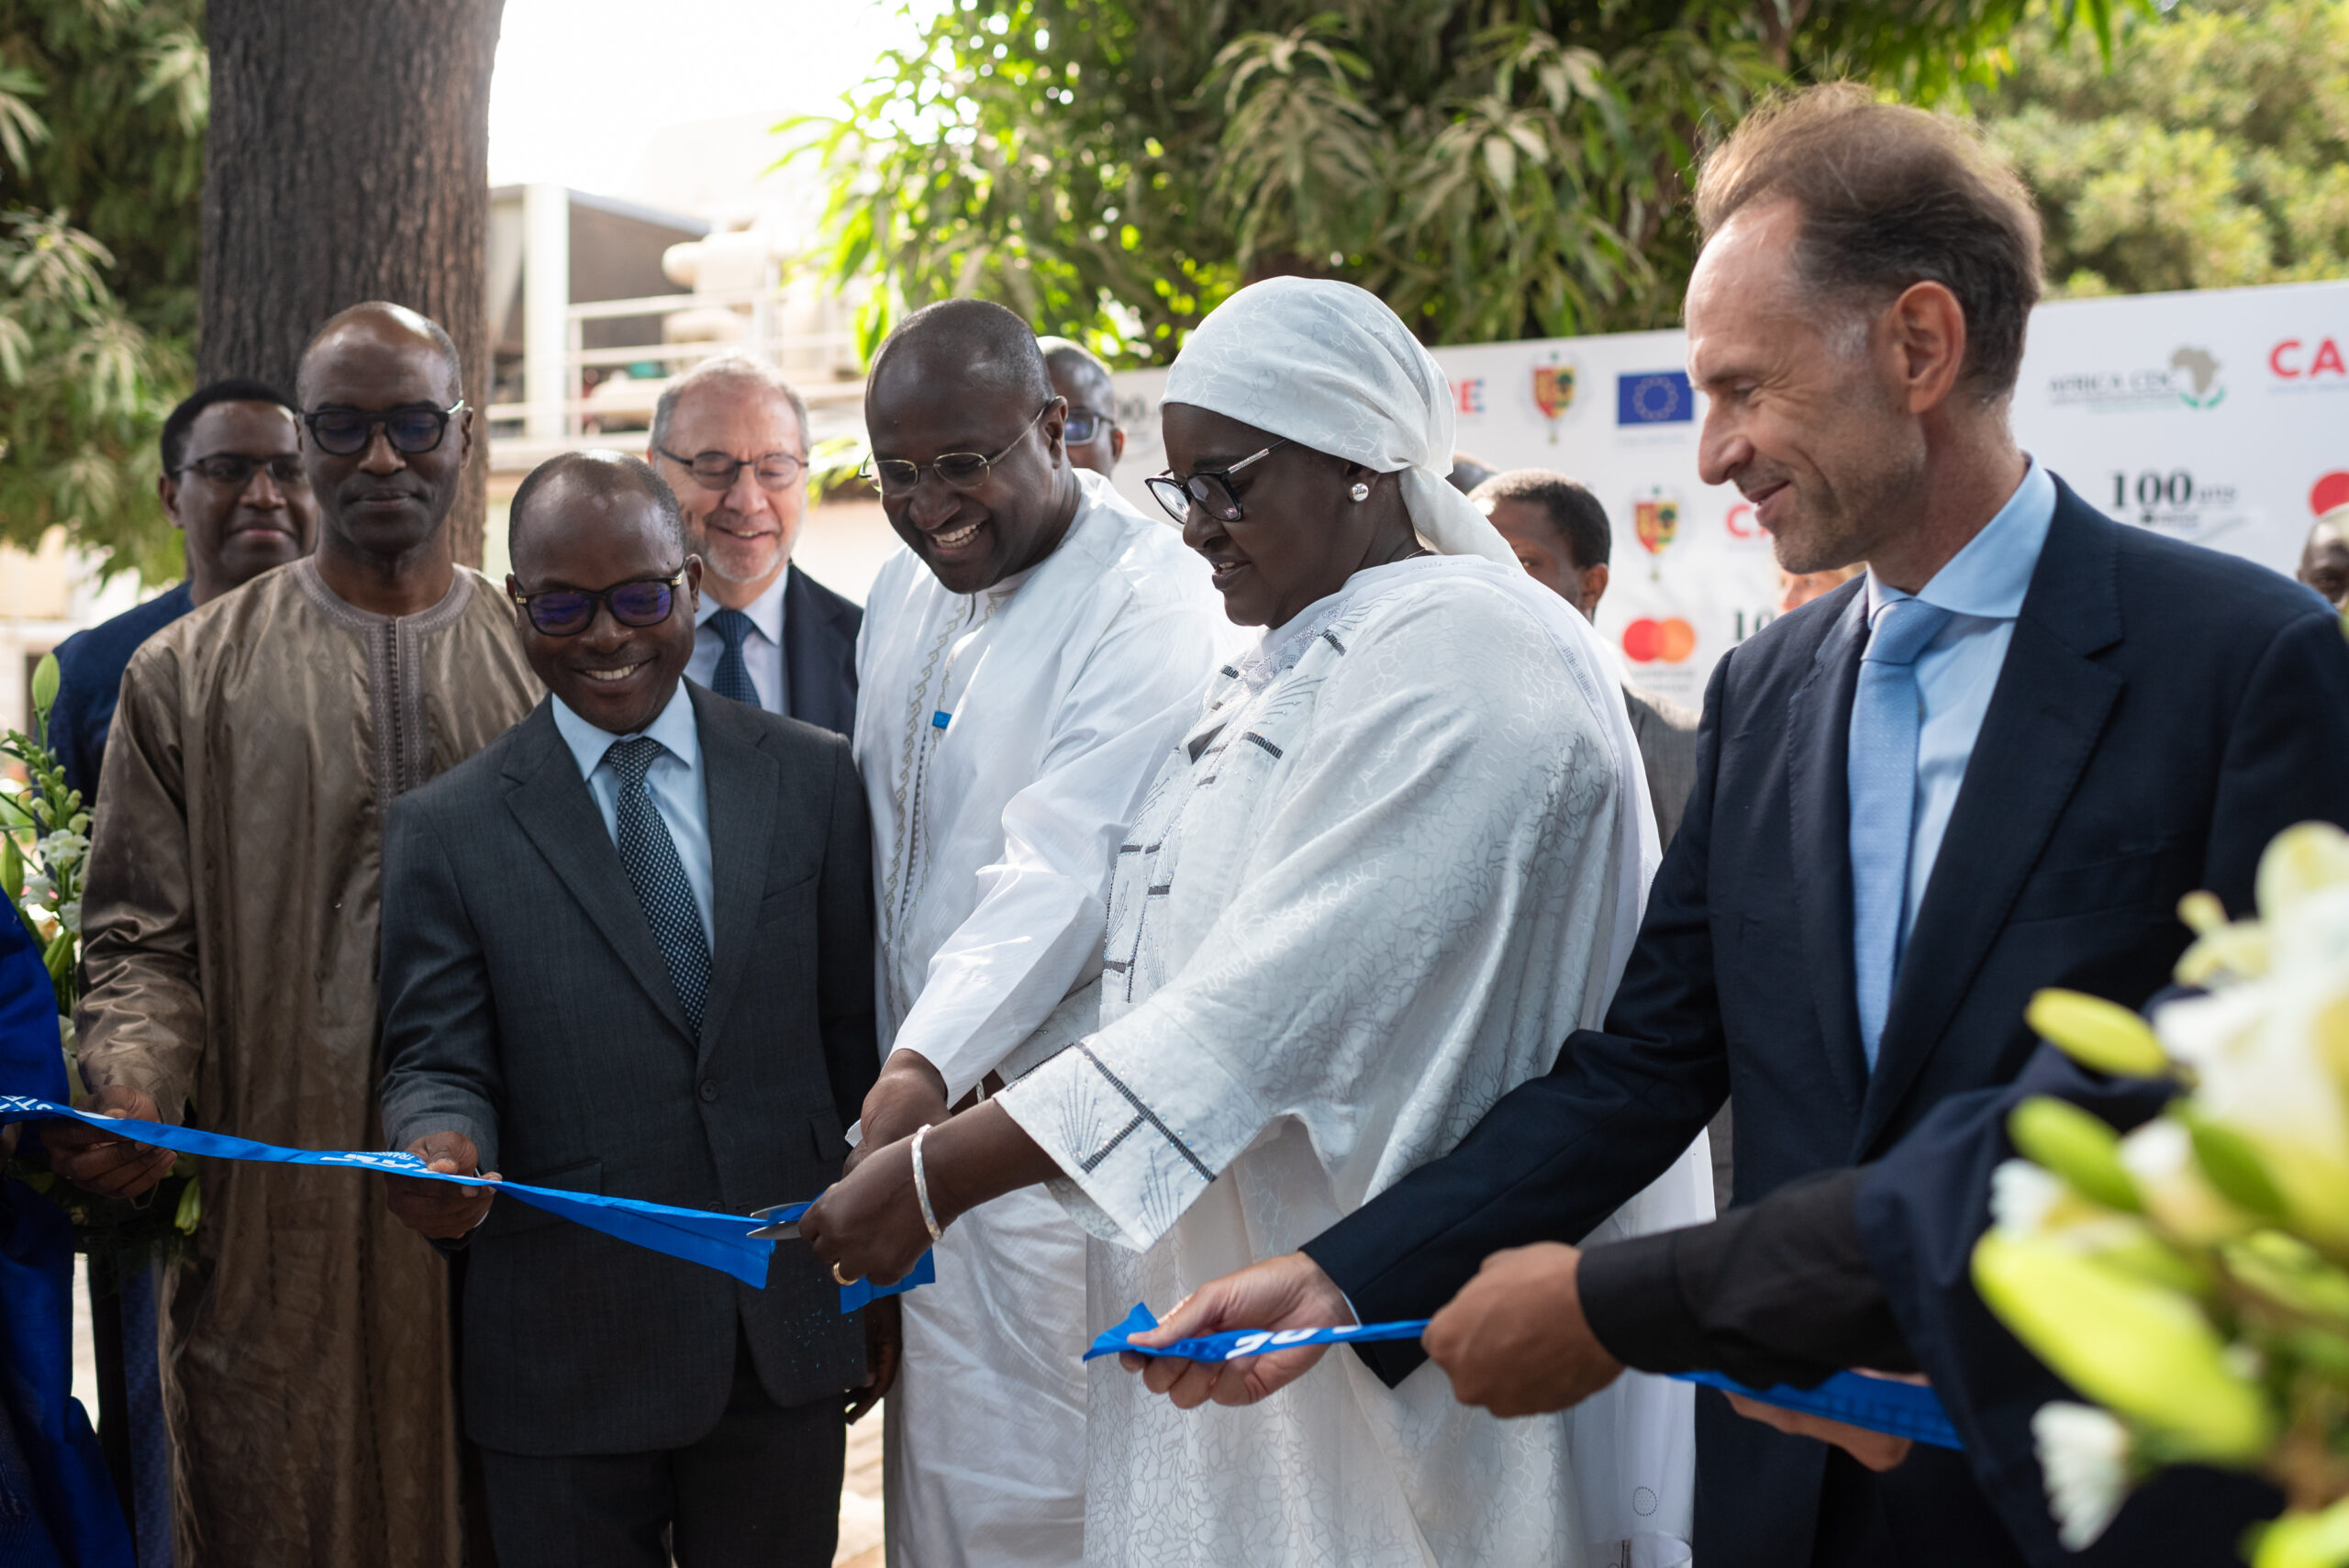 Institut Pasteur de Dakar in Partnership with Mastercard Foundation article header image